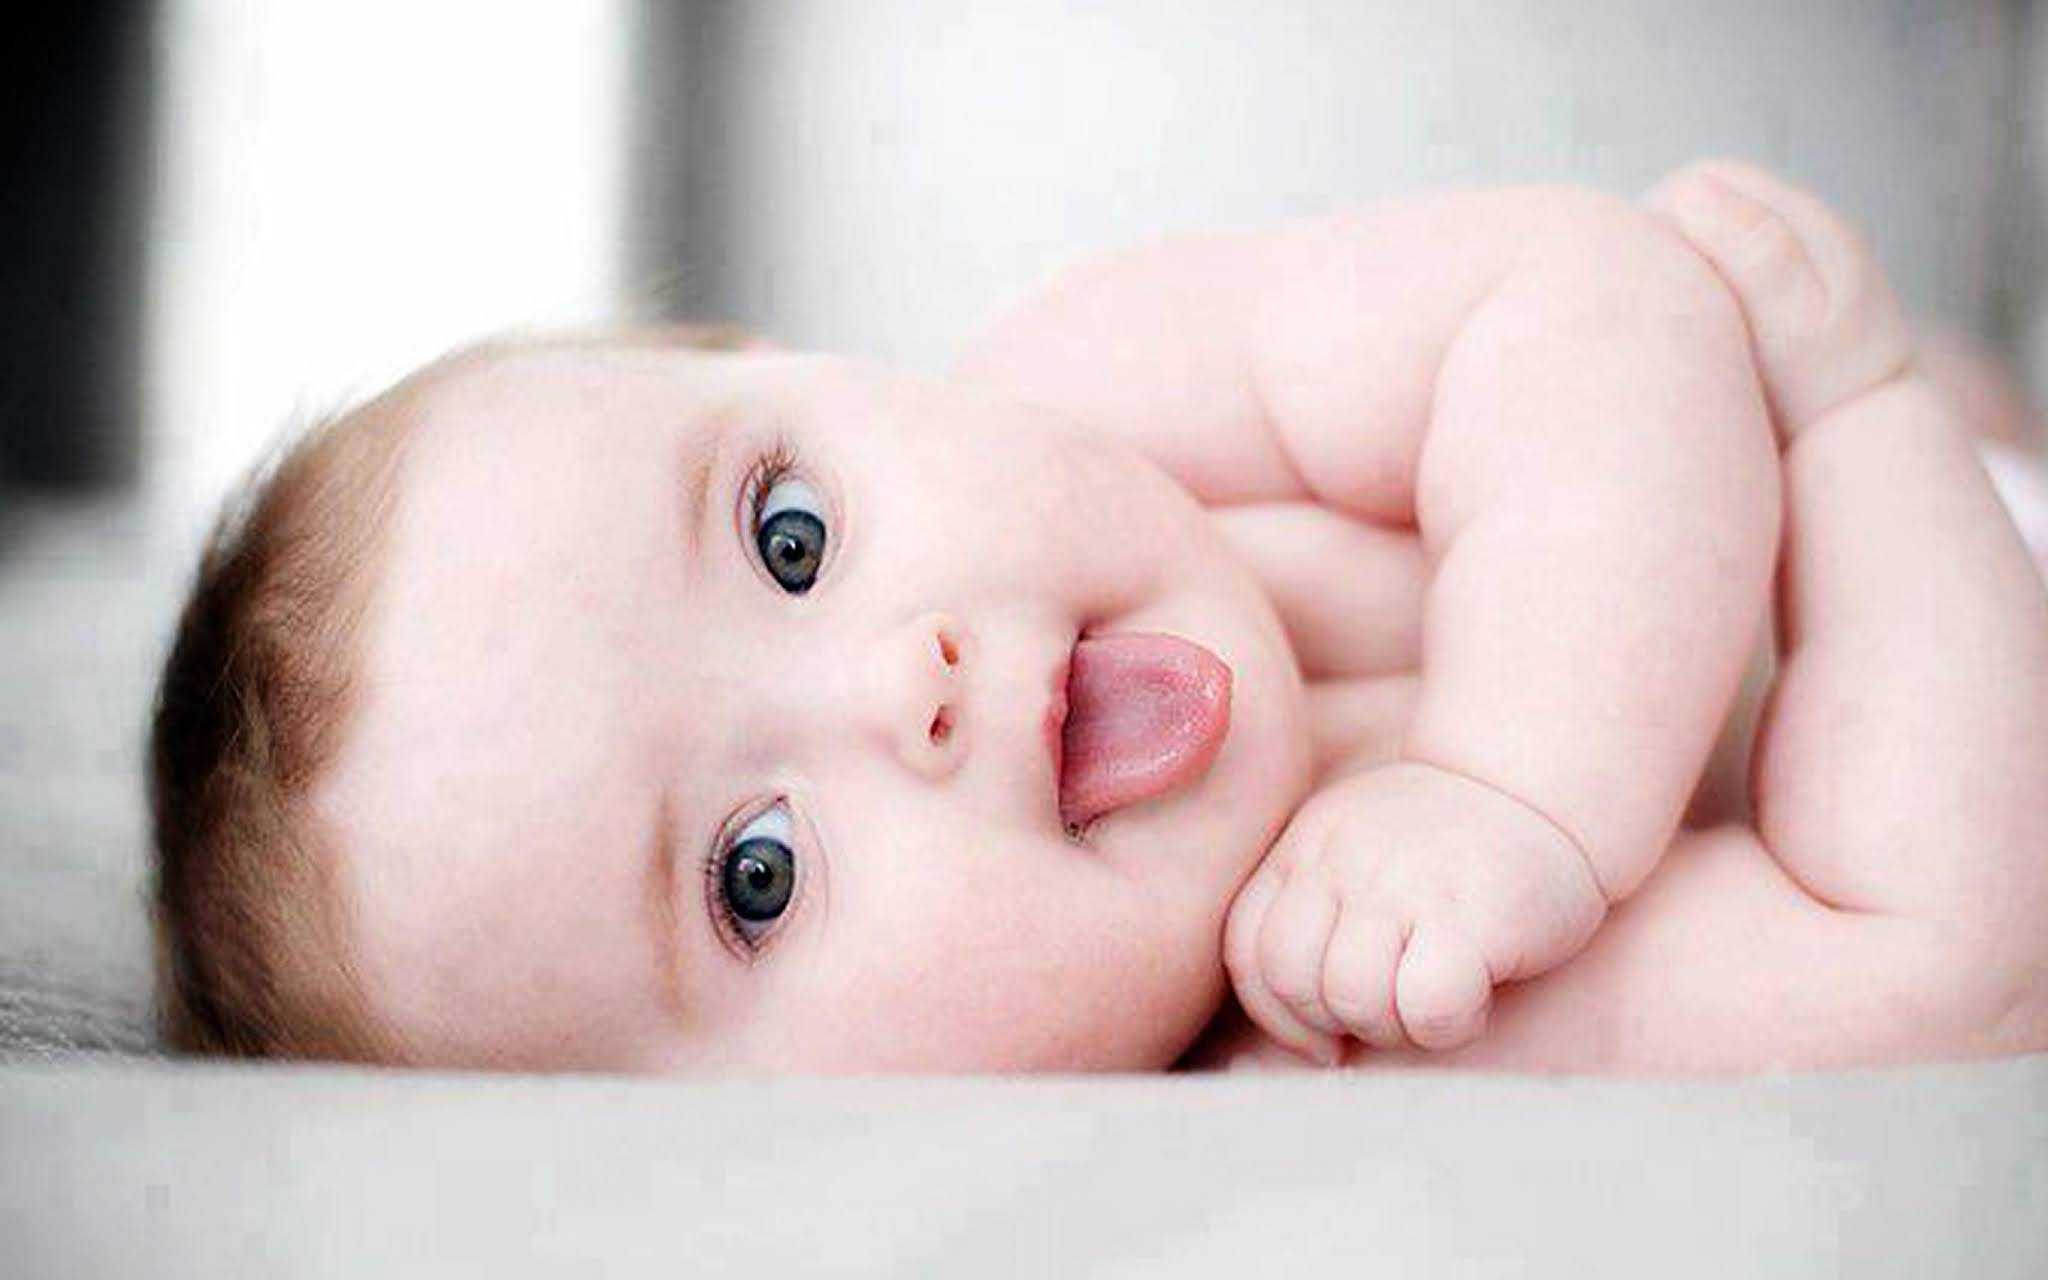 Cute Baby DP for Whatsapp Profile